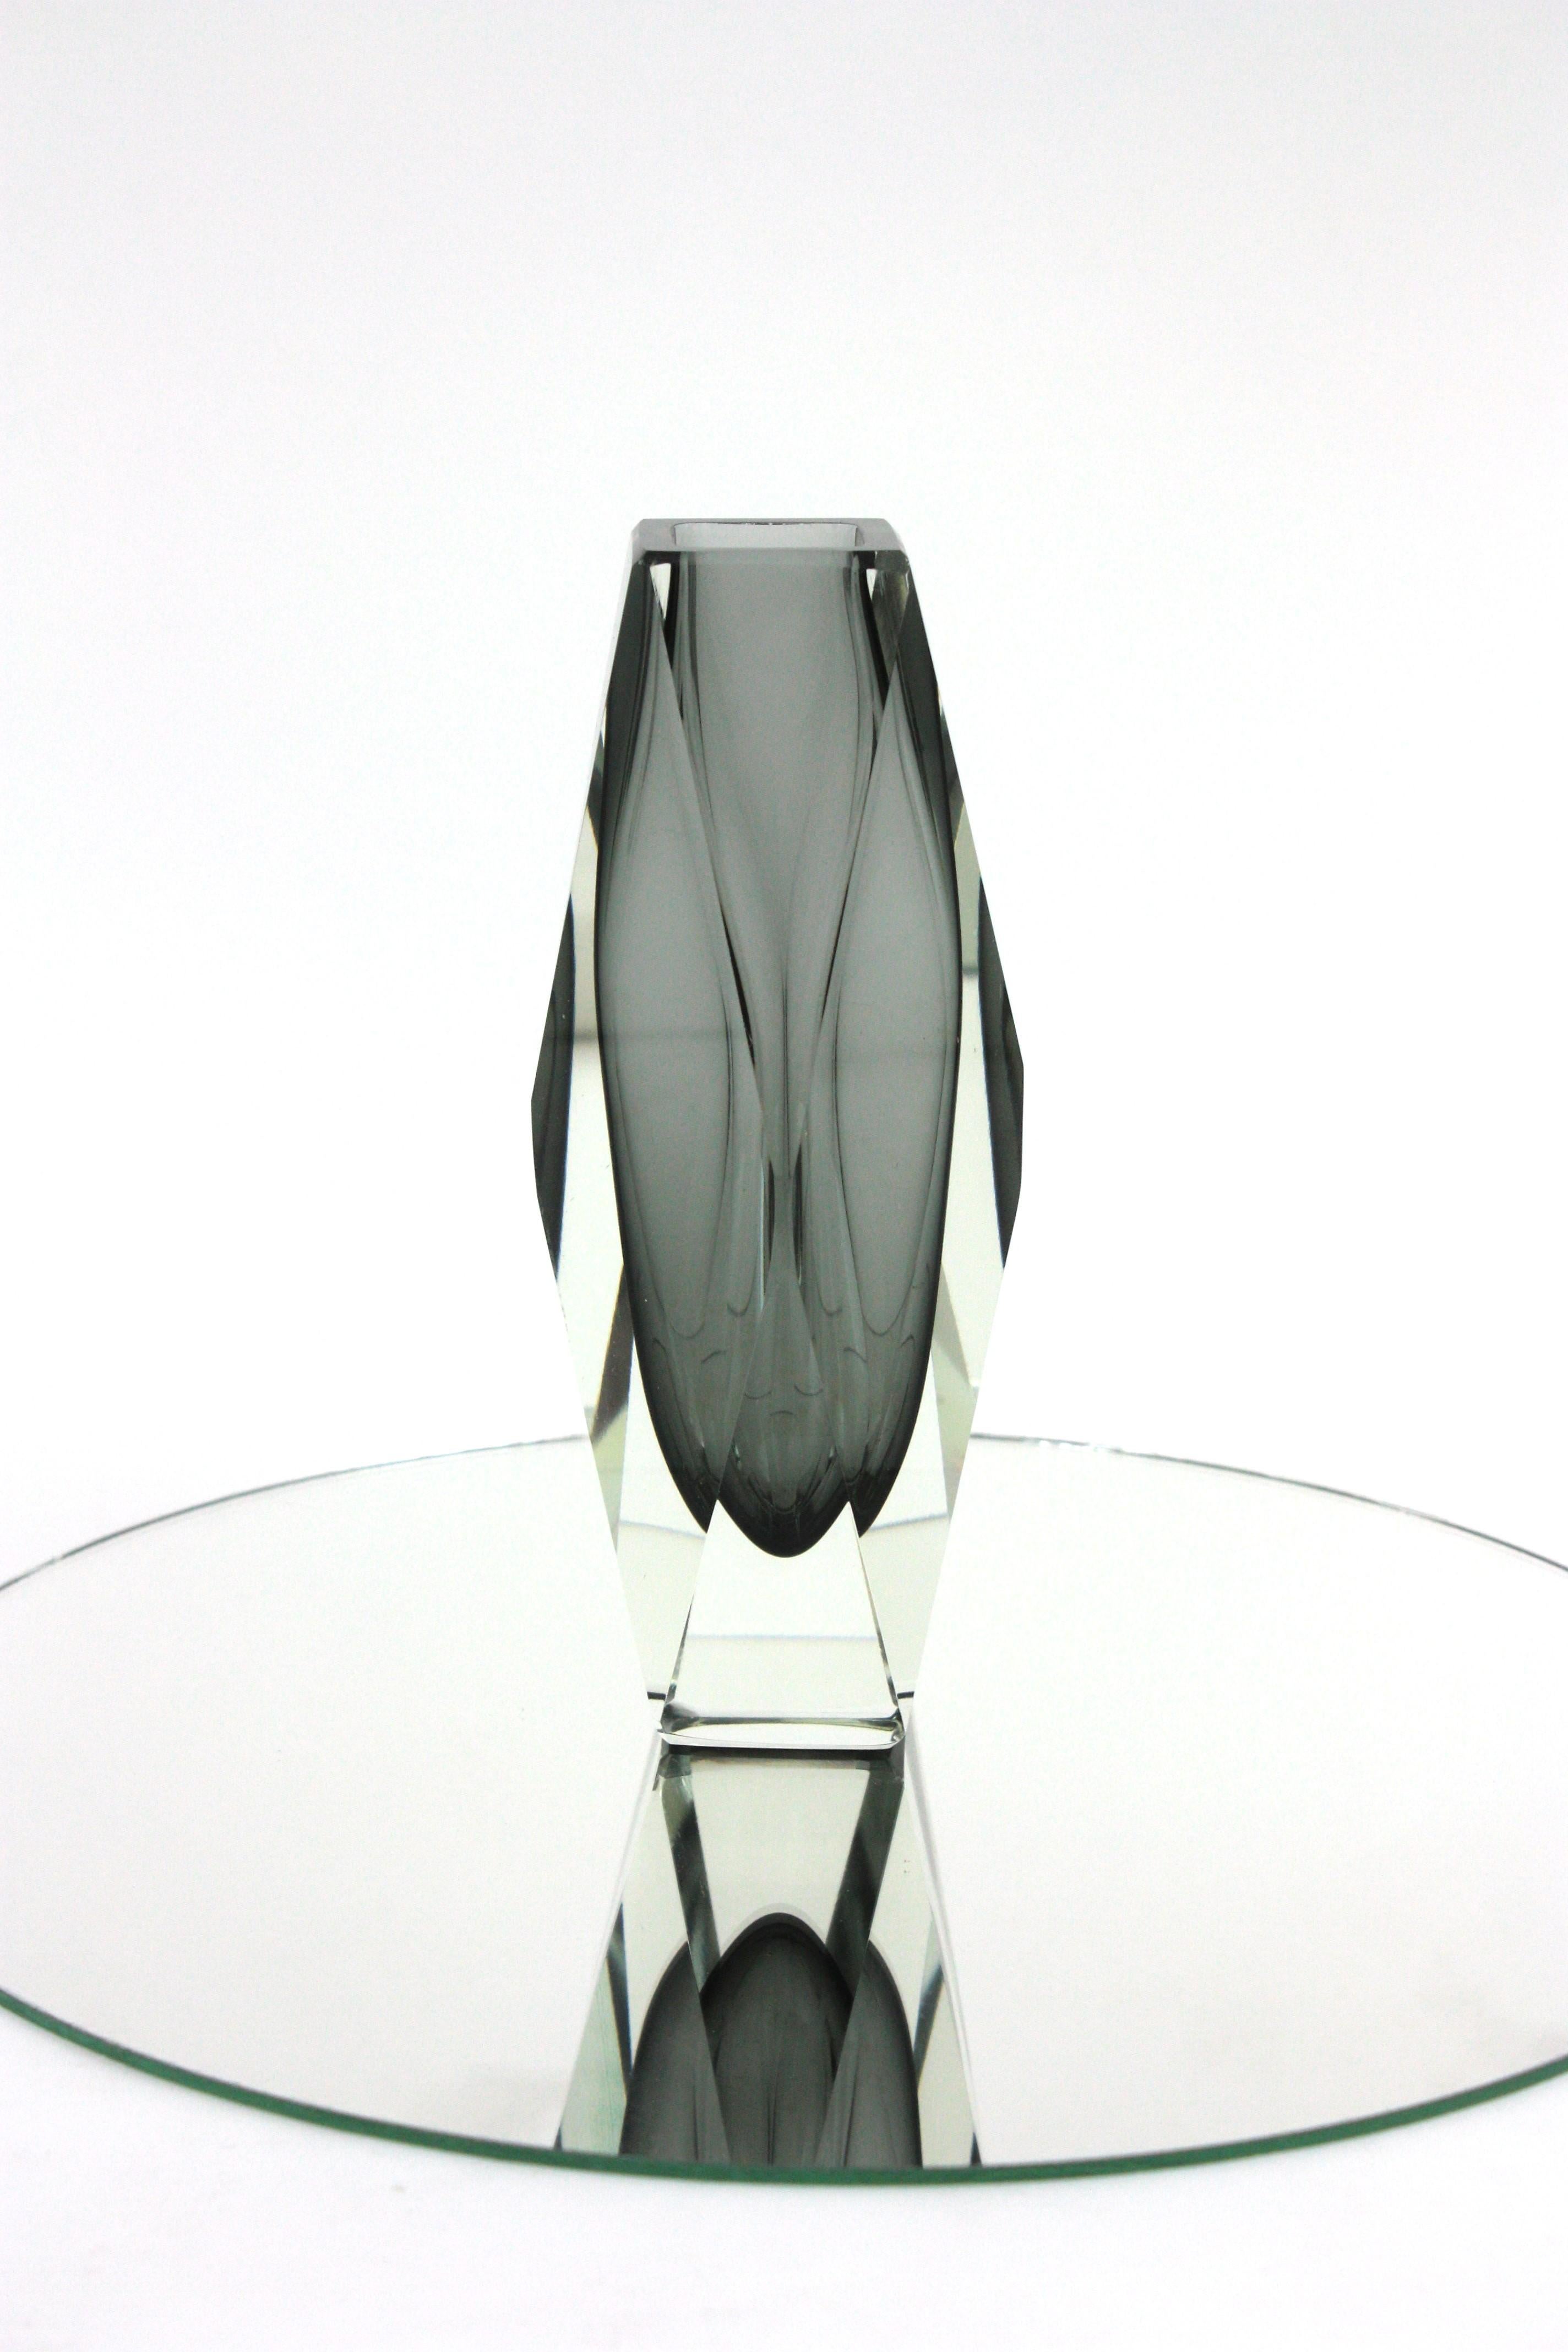 Mandruzzato Murano Sommerso Geräuchert Grau Klar Facettiert Kunstglas Vase (Italienisch) im Angebot